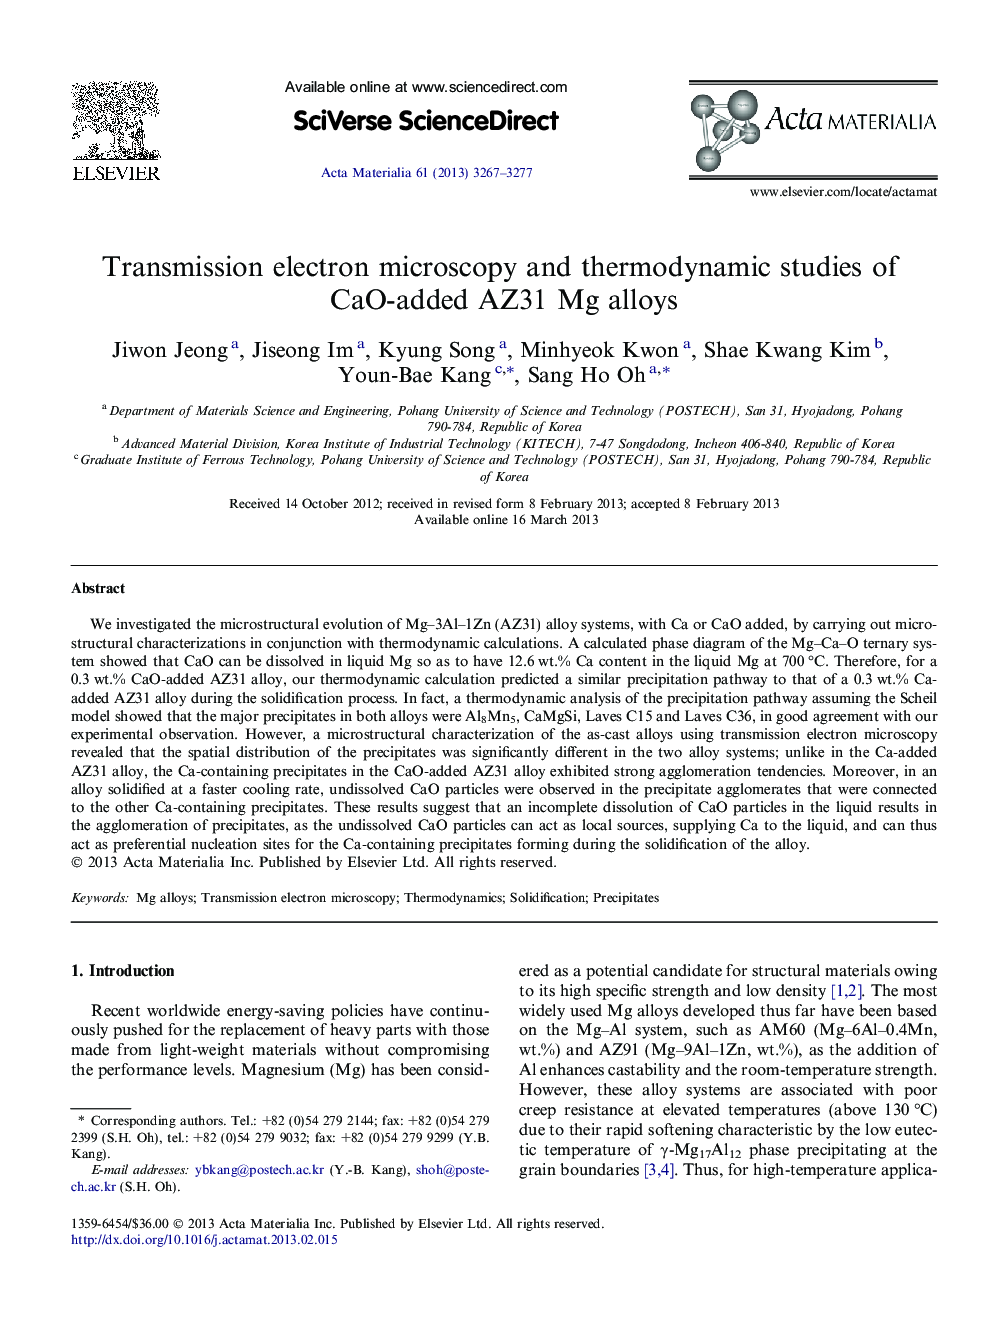 Transmission electron microscopy and thermodynamic studies of CaO-added AZ31 Mg alloys